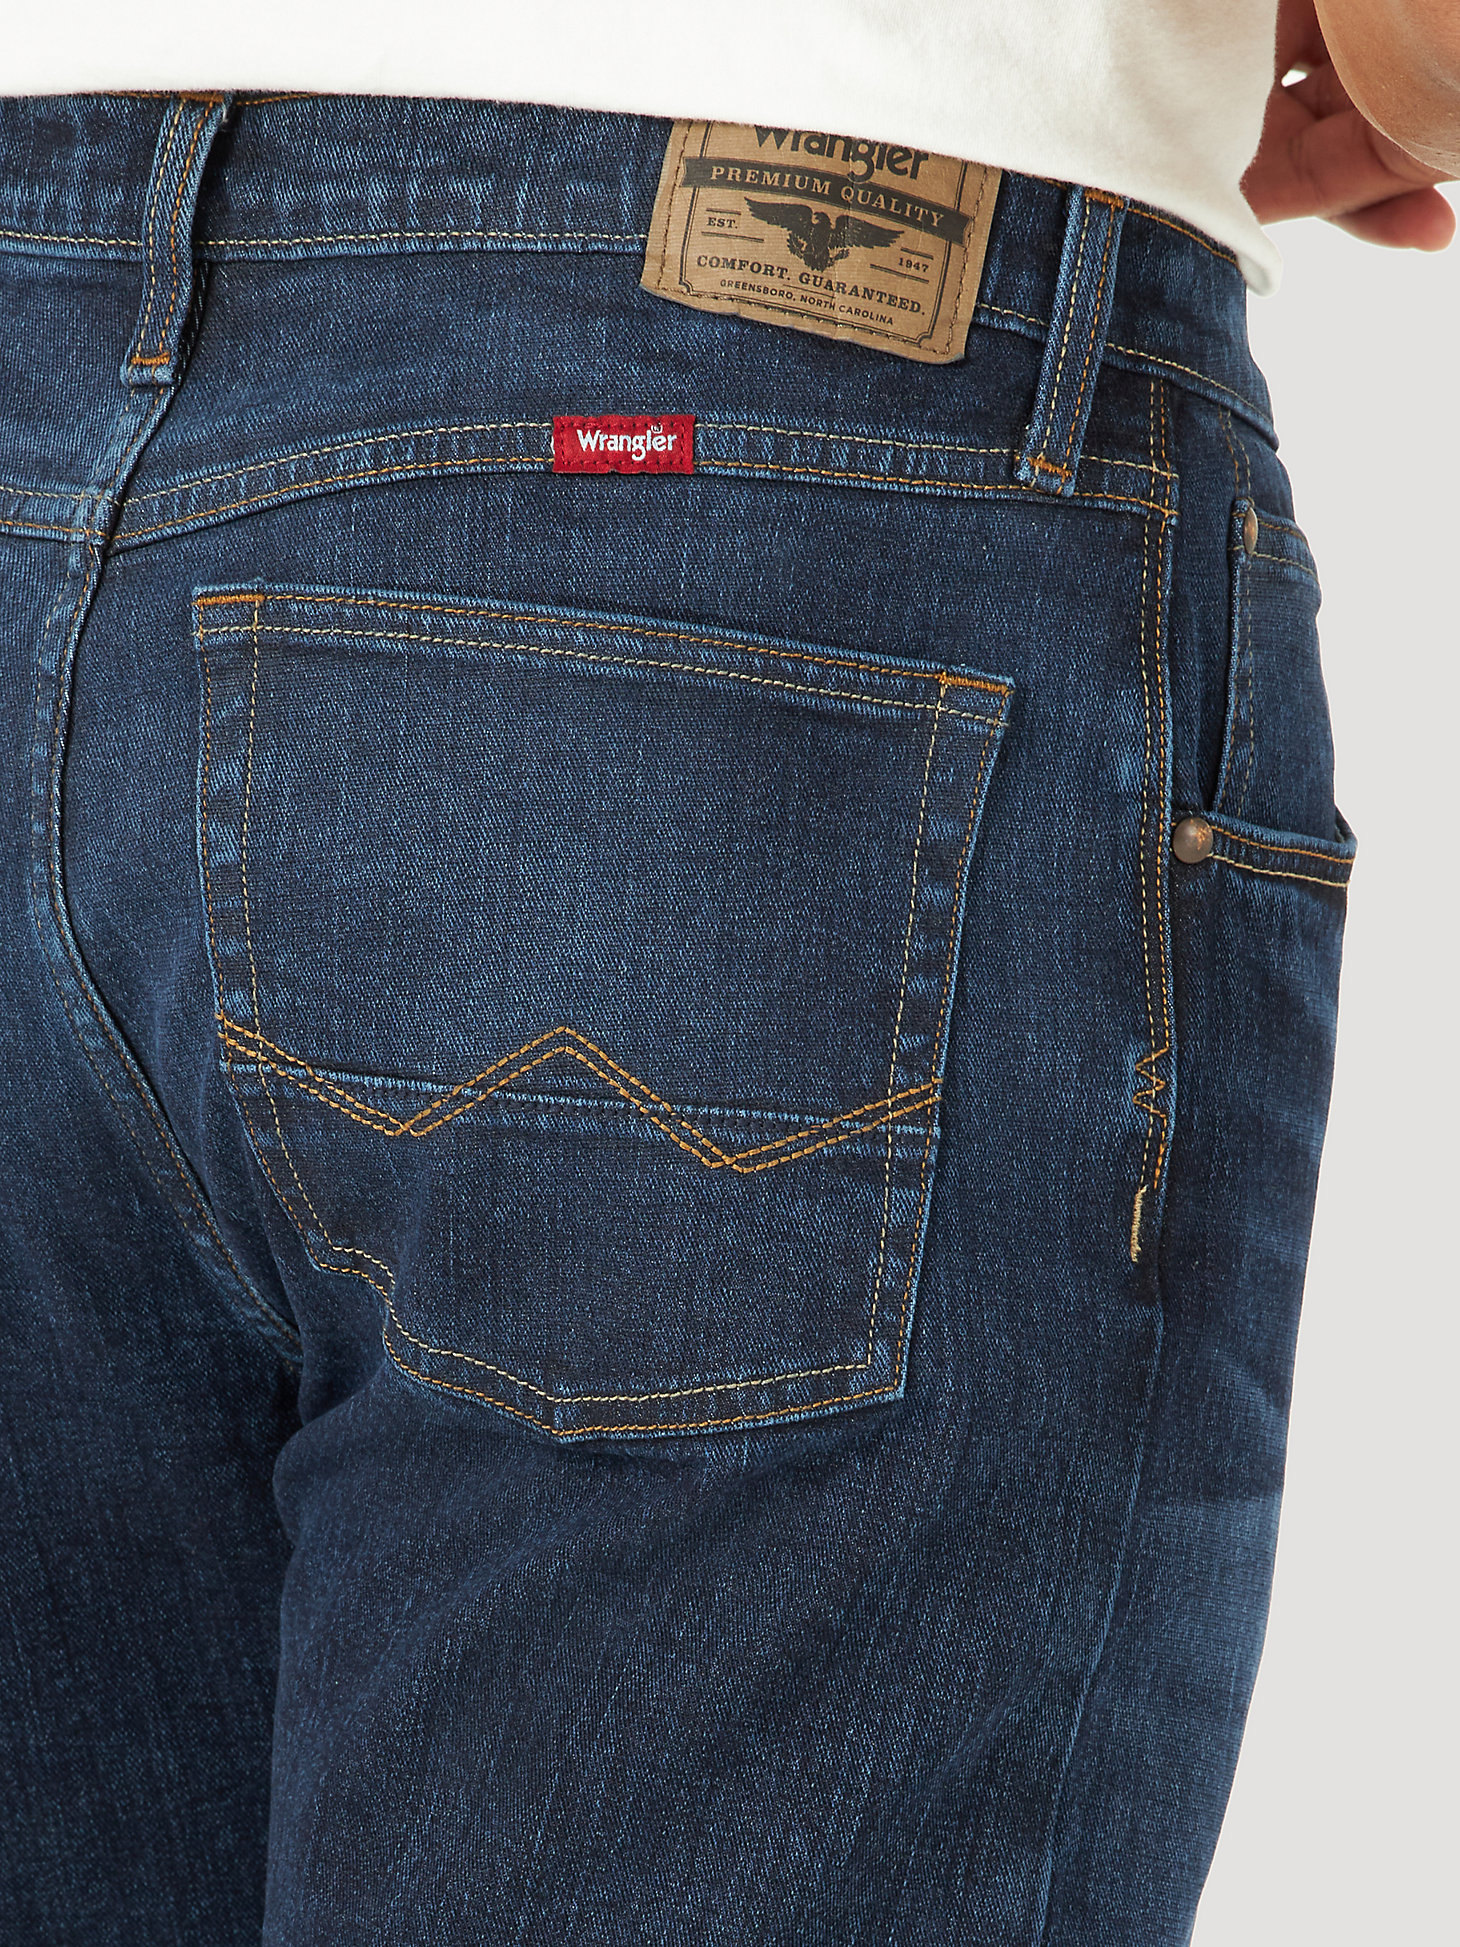 Men's Five Star Premium Straight Fit Jean in Banks alternative view 3